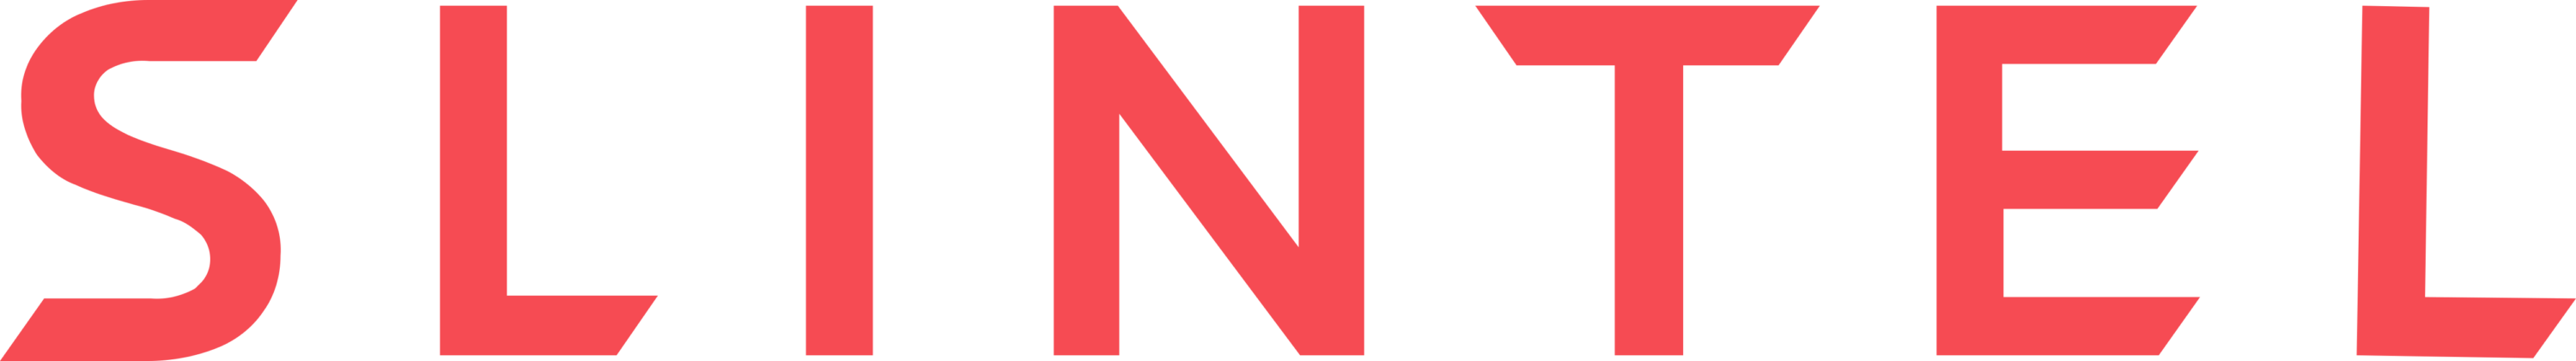 Slintel Logo